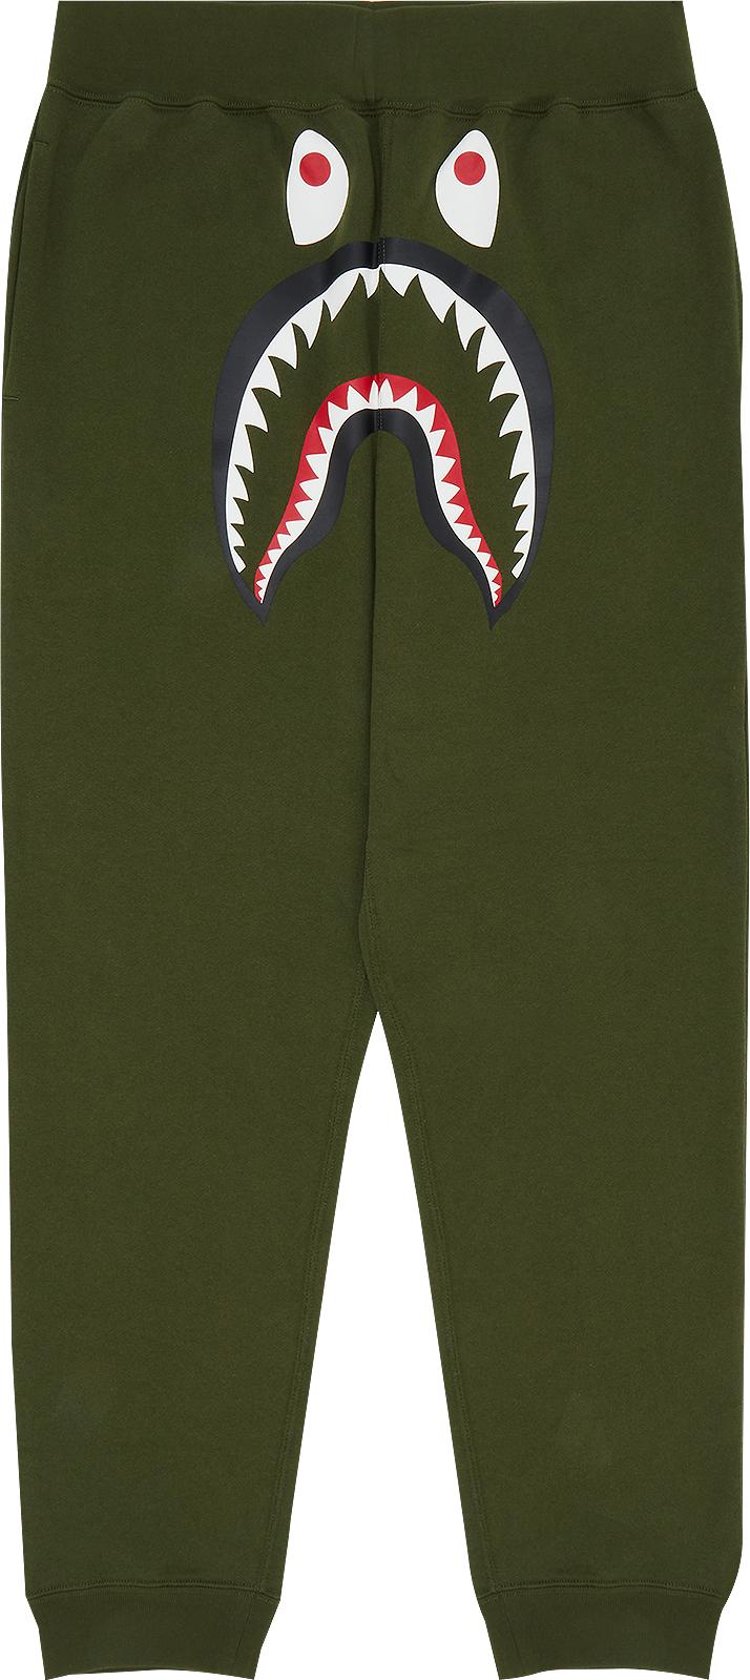 Buy BAPE Shark Sweat Pants 'Olive Drab' - 1H80 152 014 OLIVE DRAB